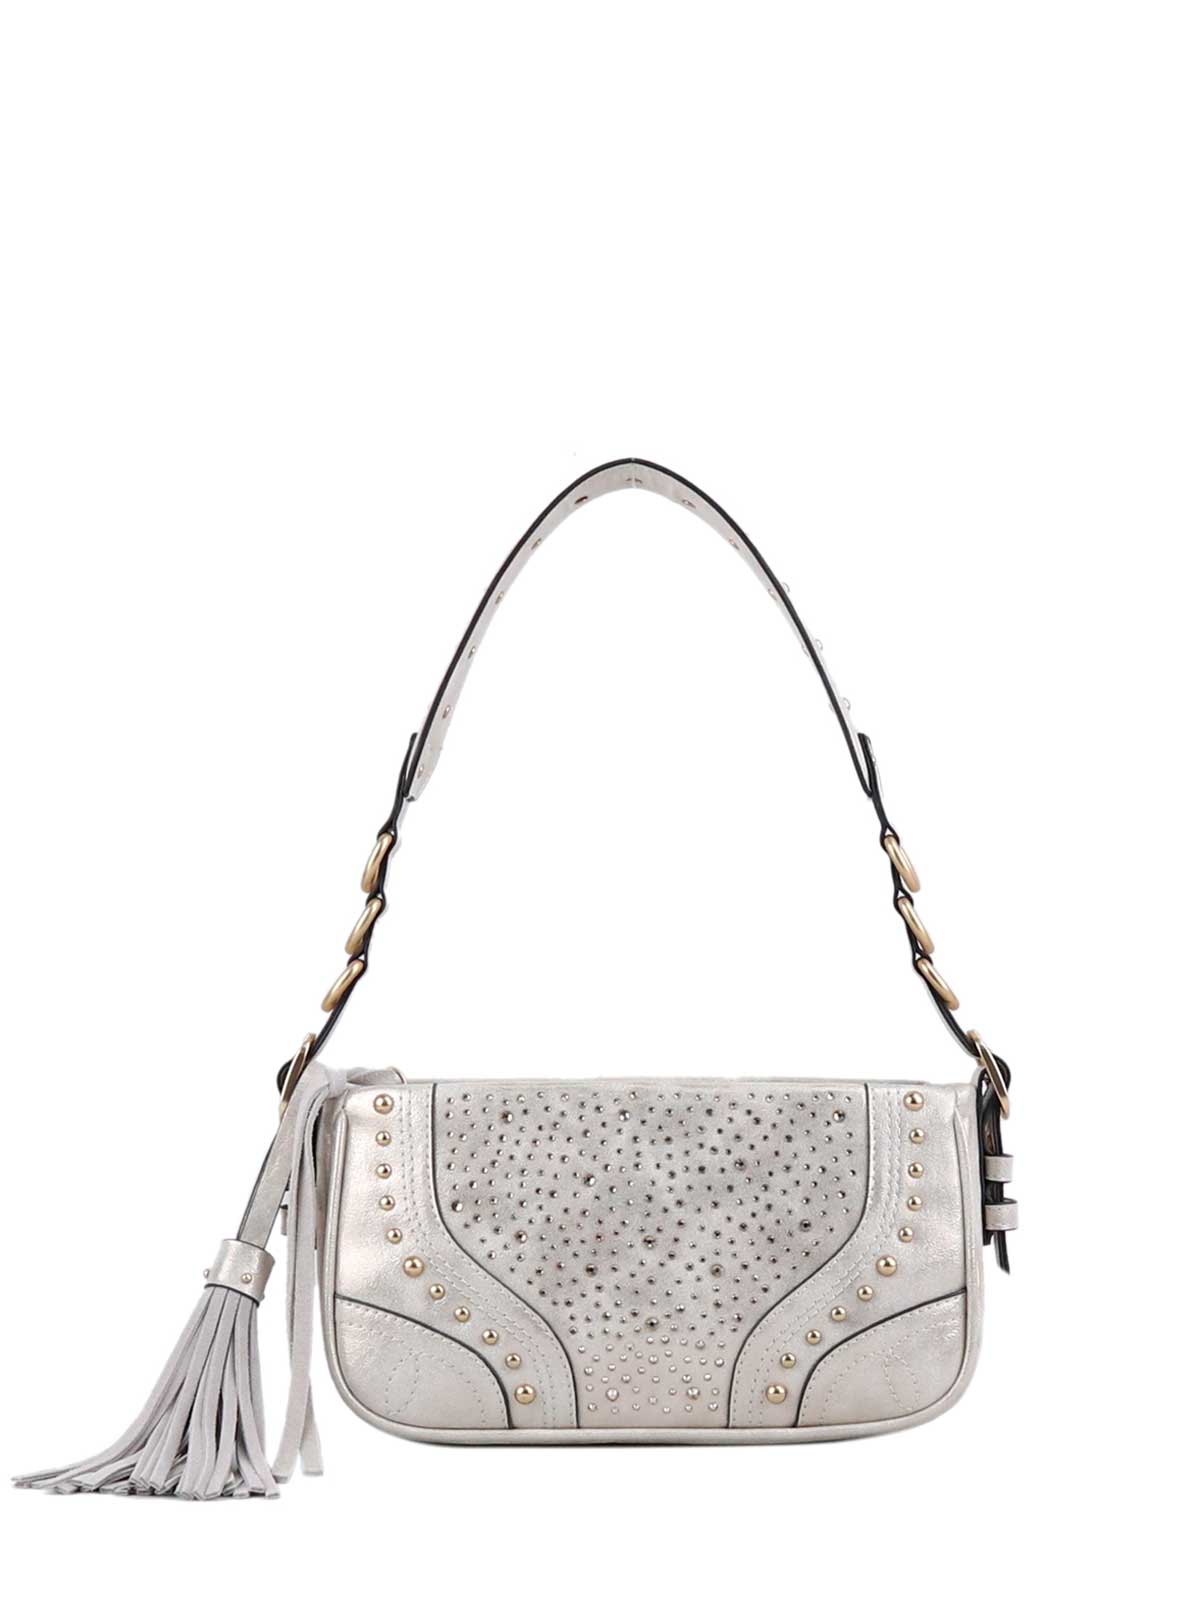 Jessica Simpson | Bags | Jessica Simpson Nwot Cream Leather Satchel Handbag  | Poshmark